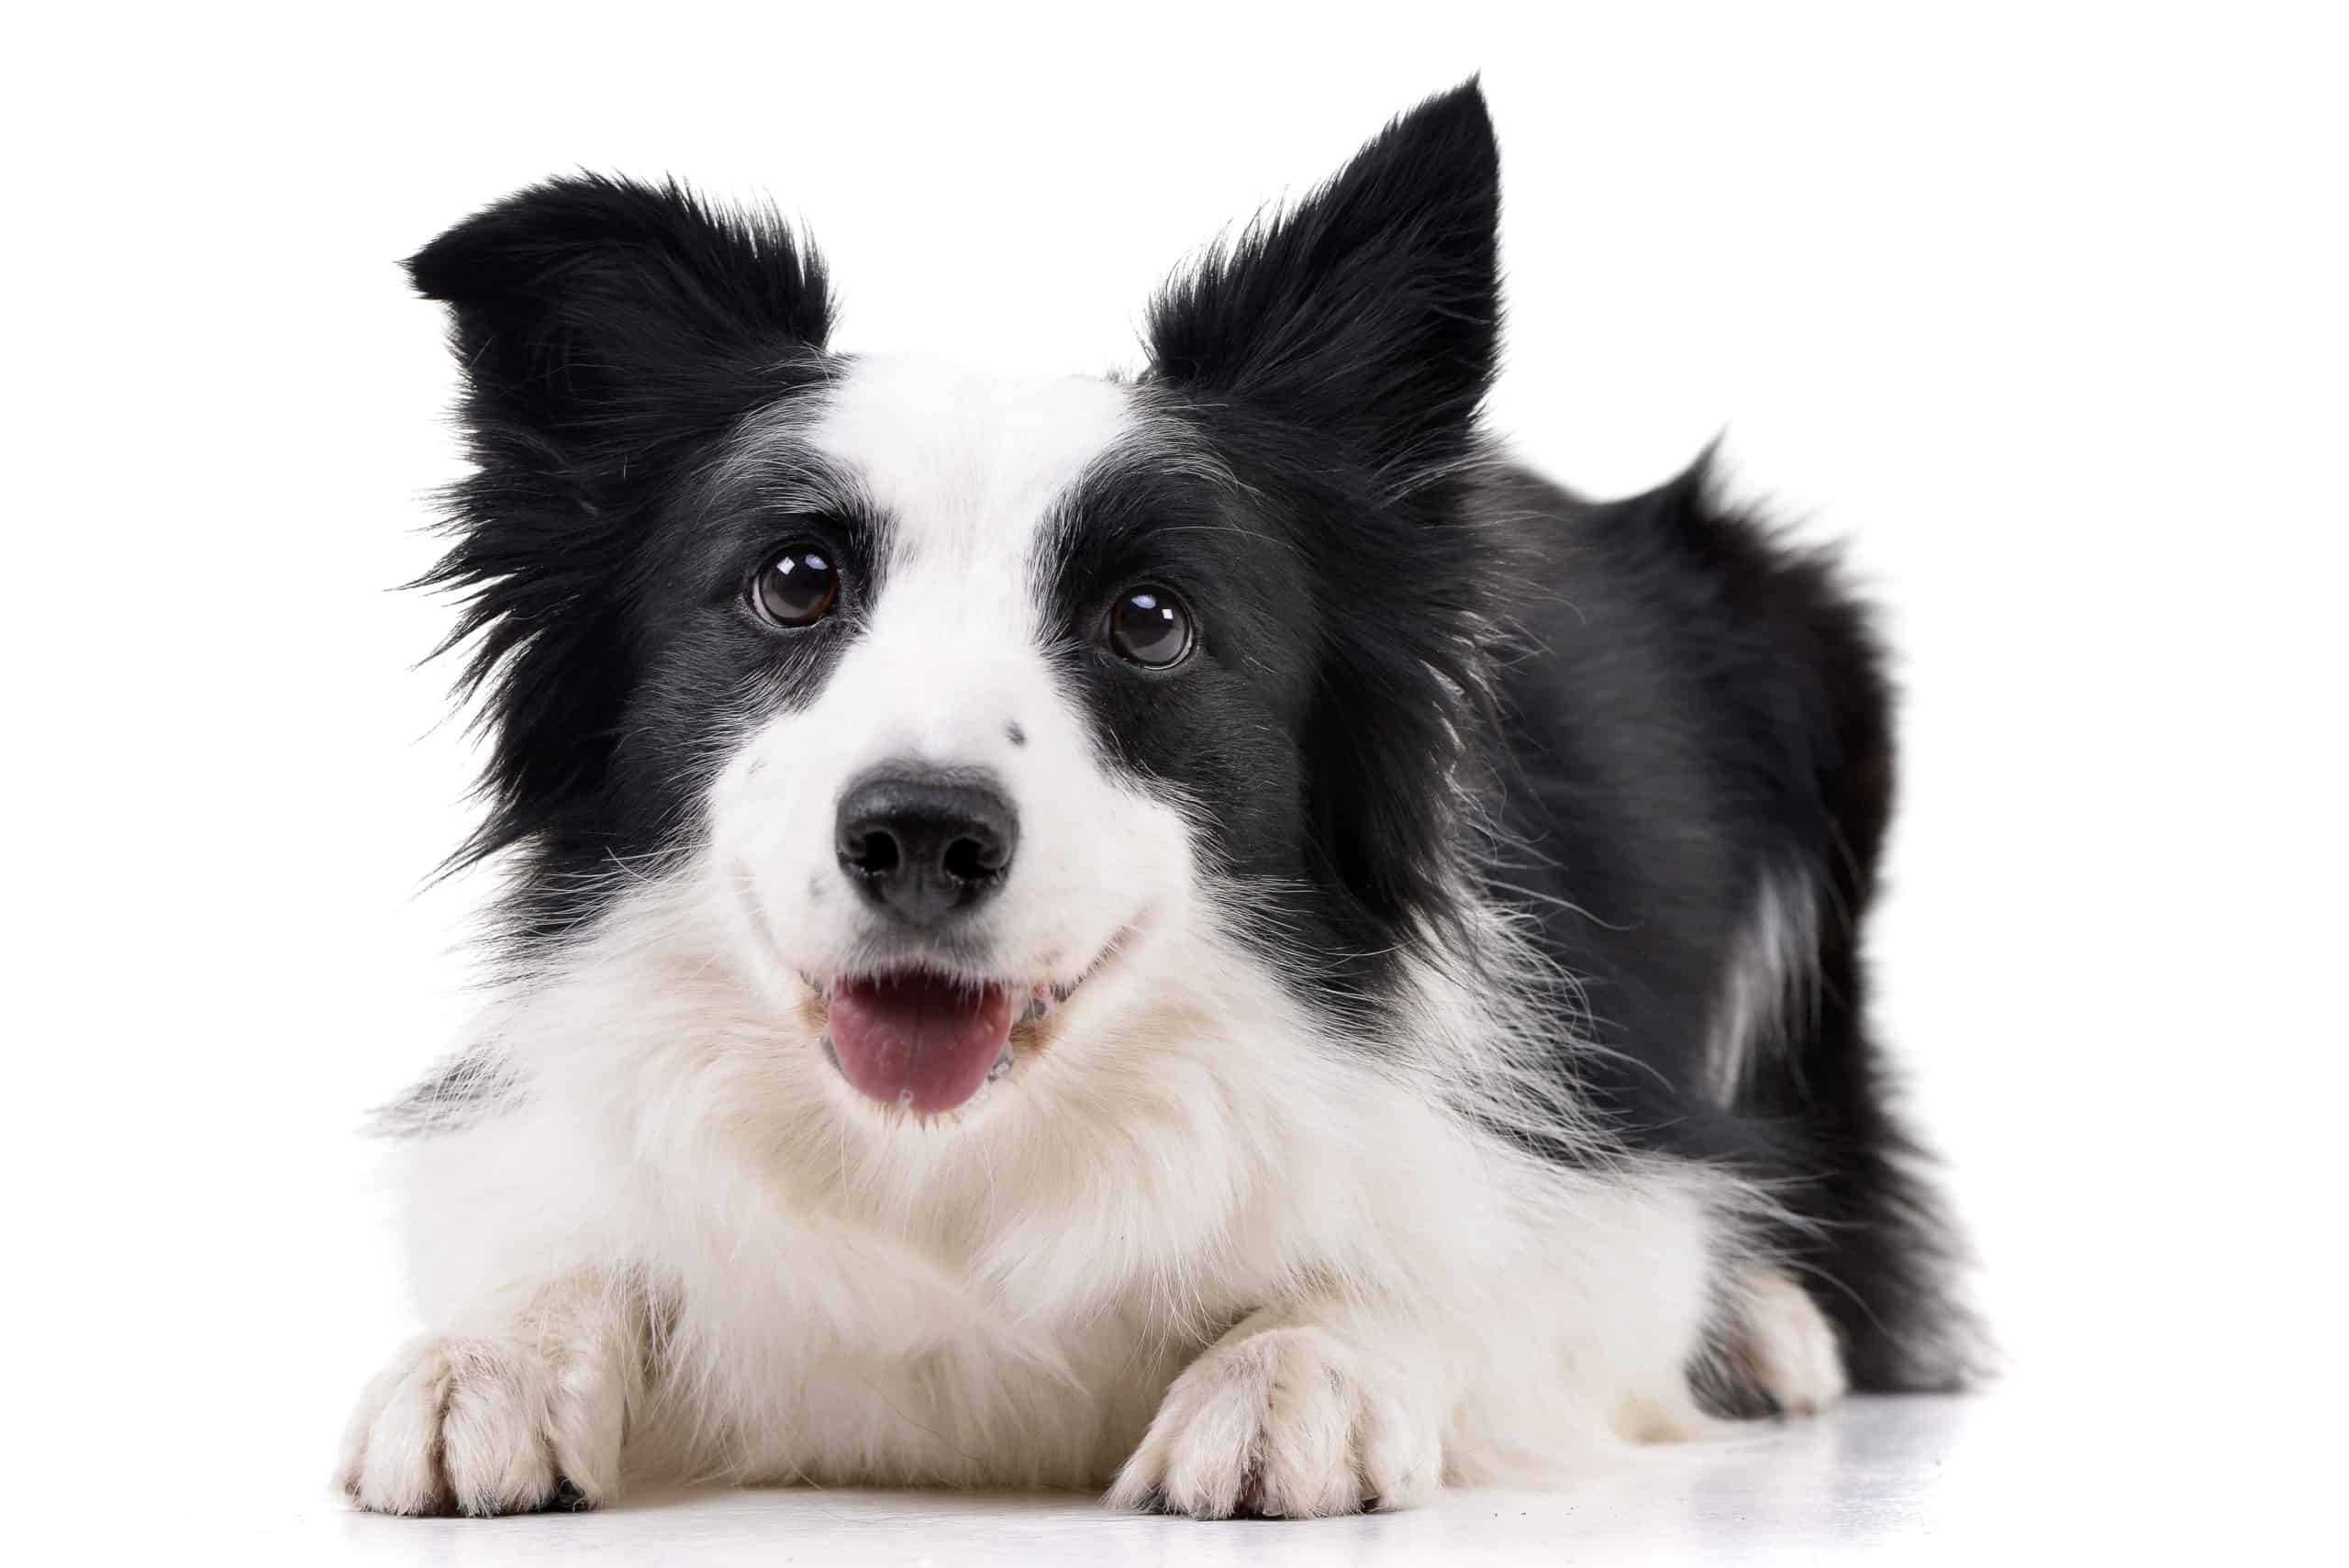 The border collie is included on the DogsBestLife.com smartest dog breeds list.